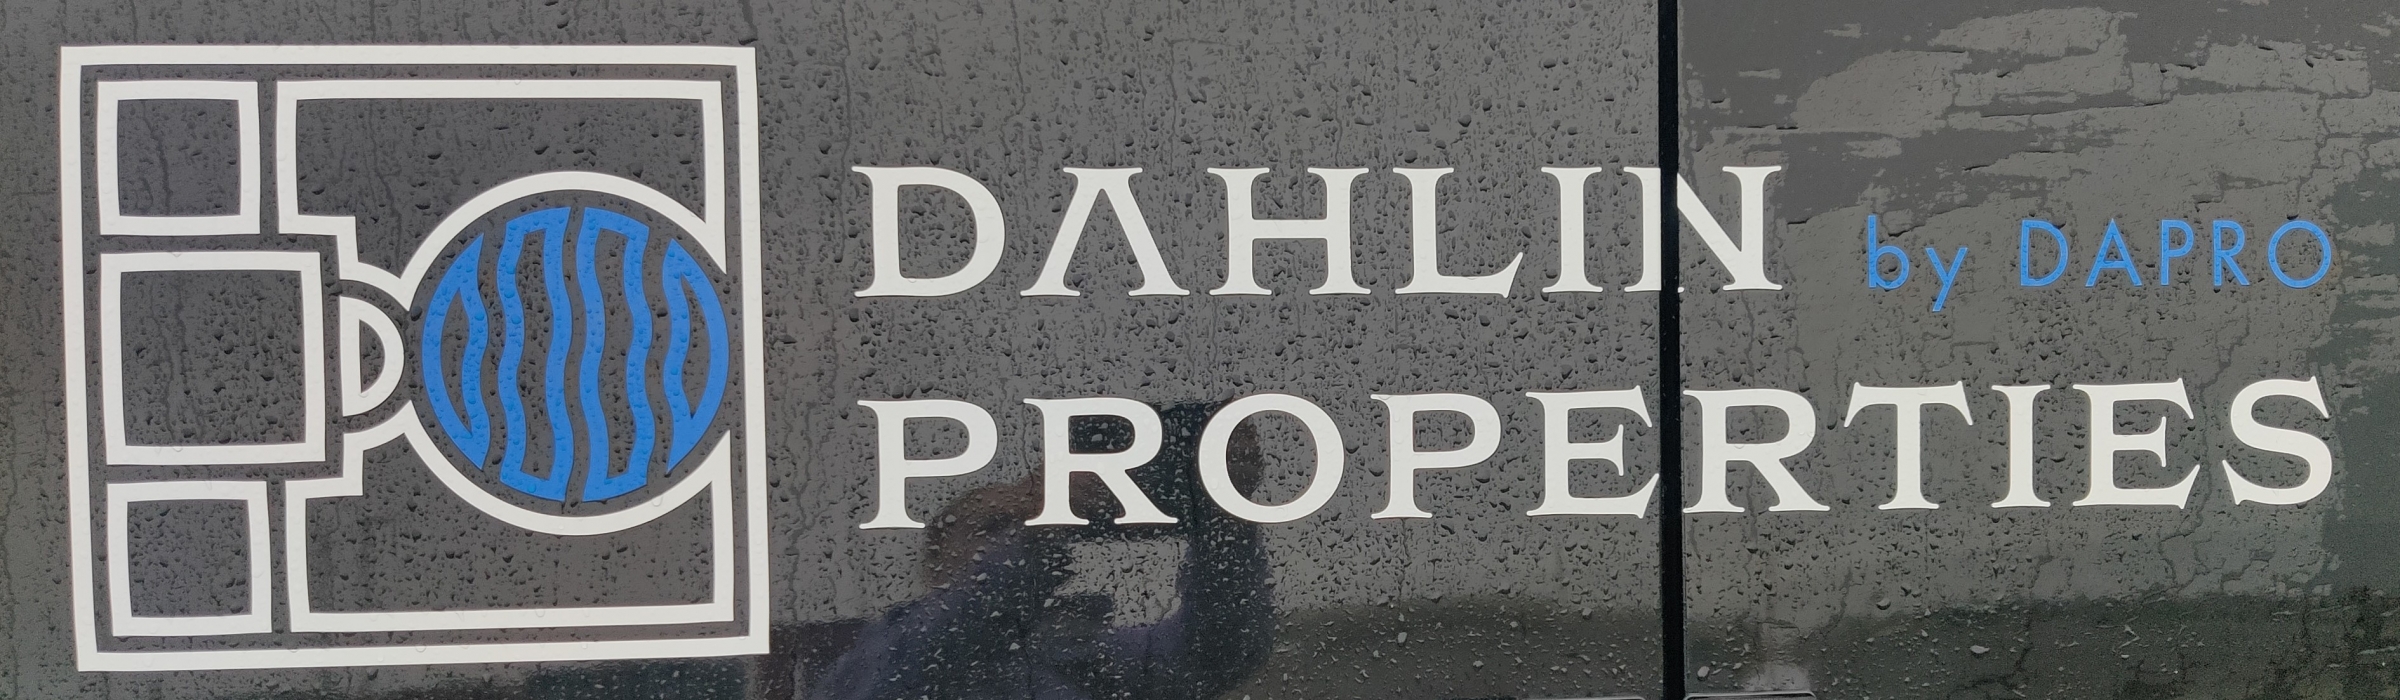 Dahlin Properties